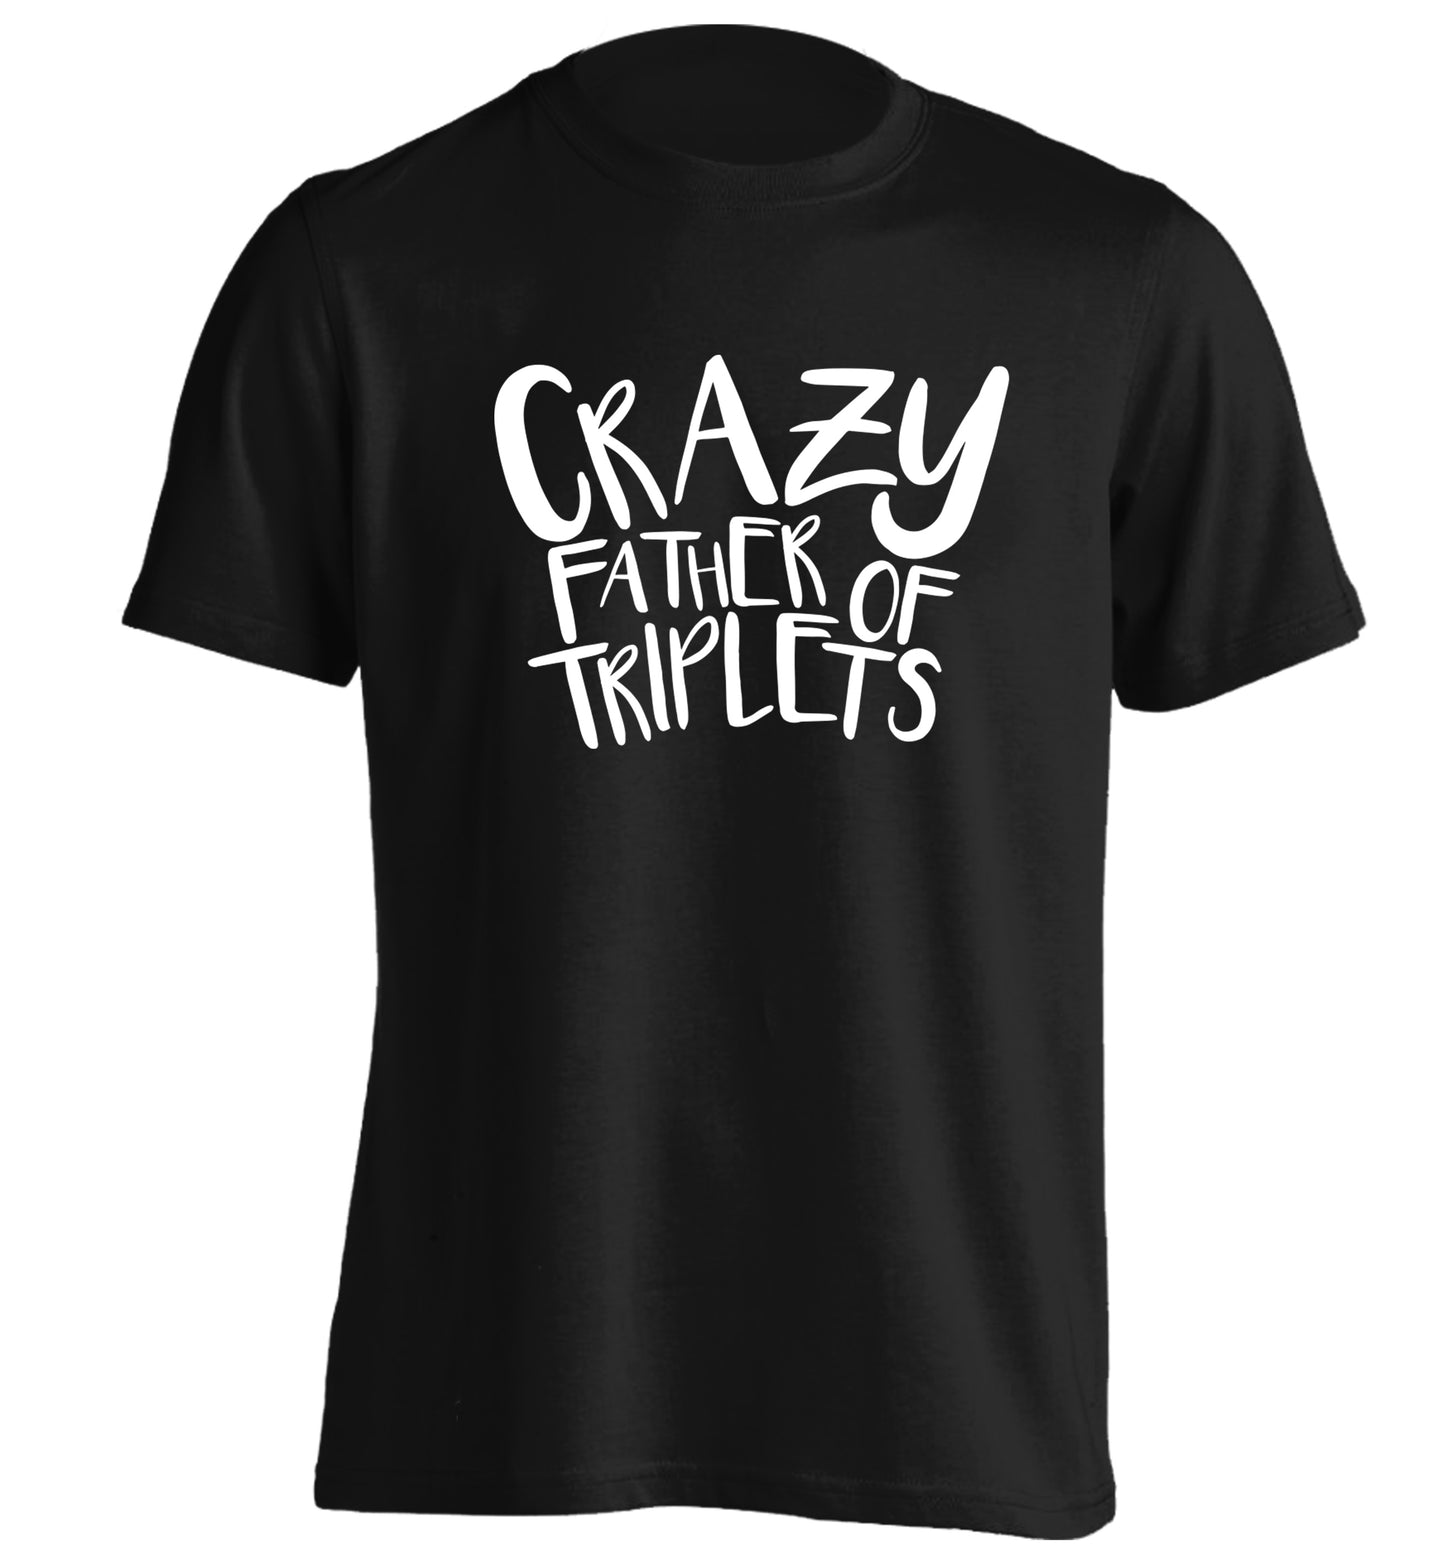 Crazy father of triplets adults unisex black Tshirt 2XL